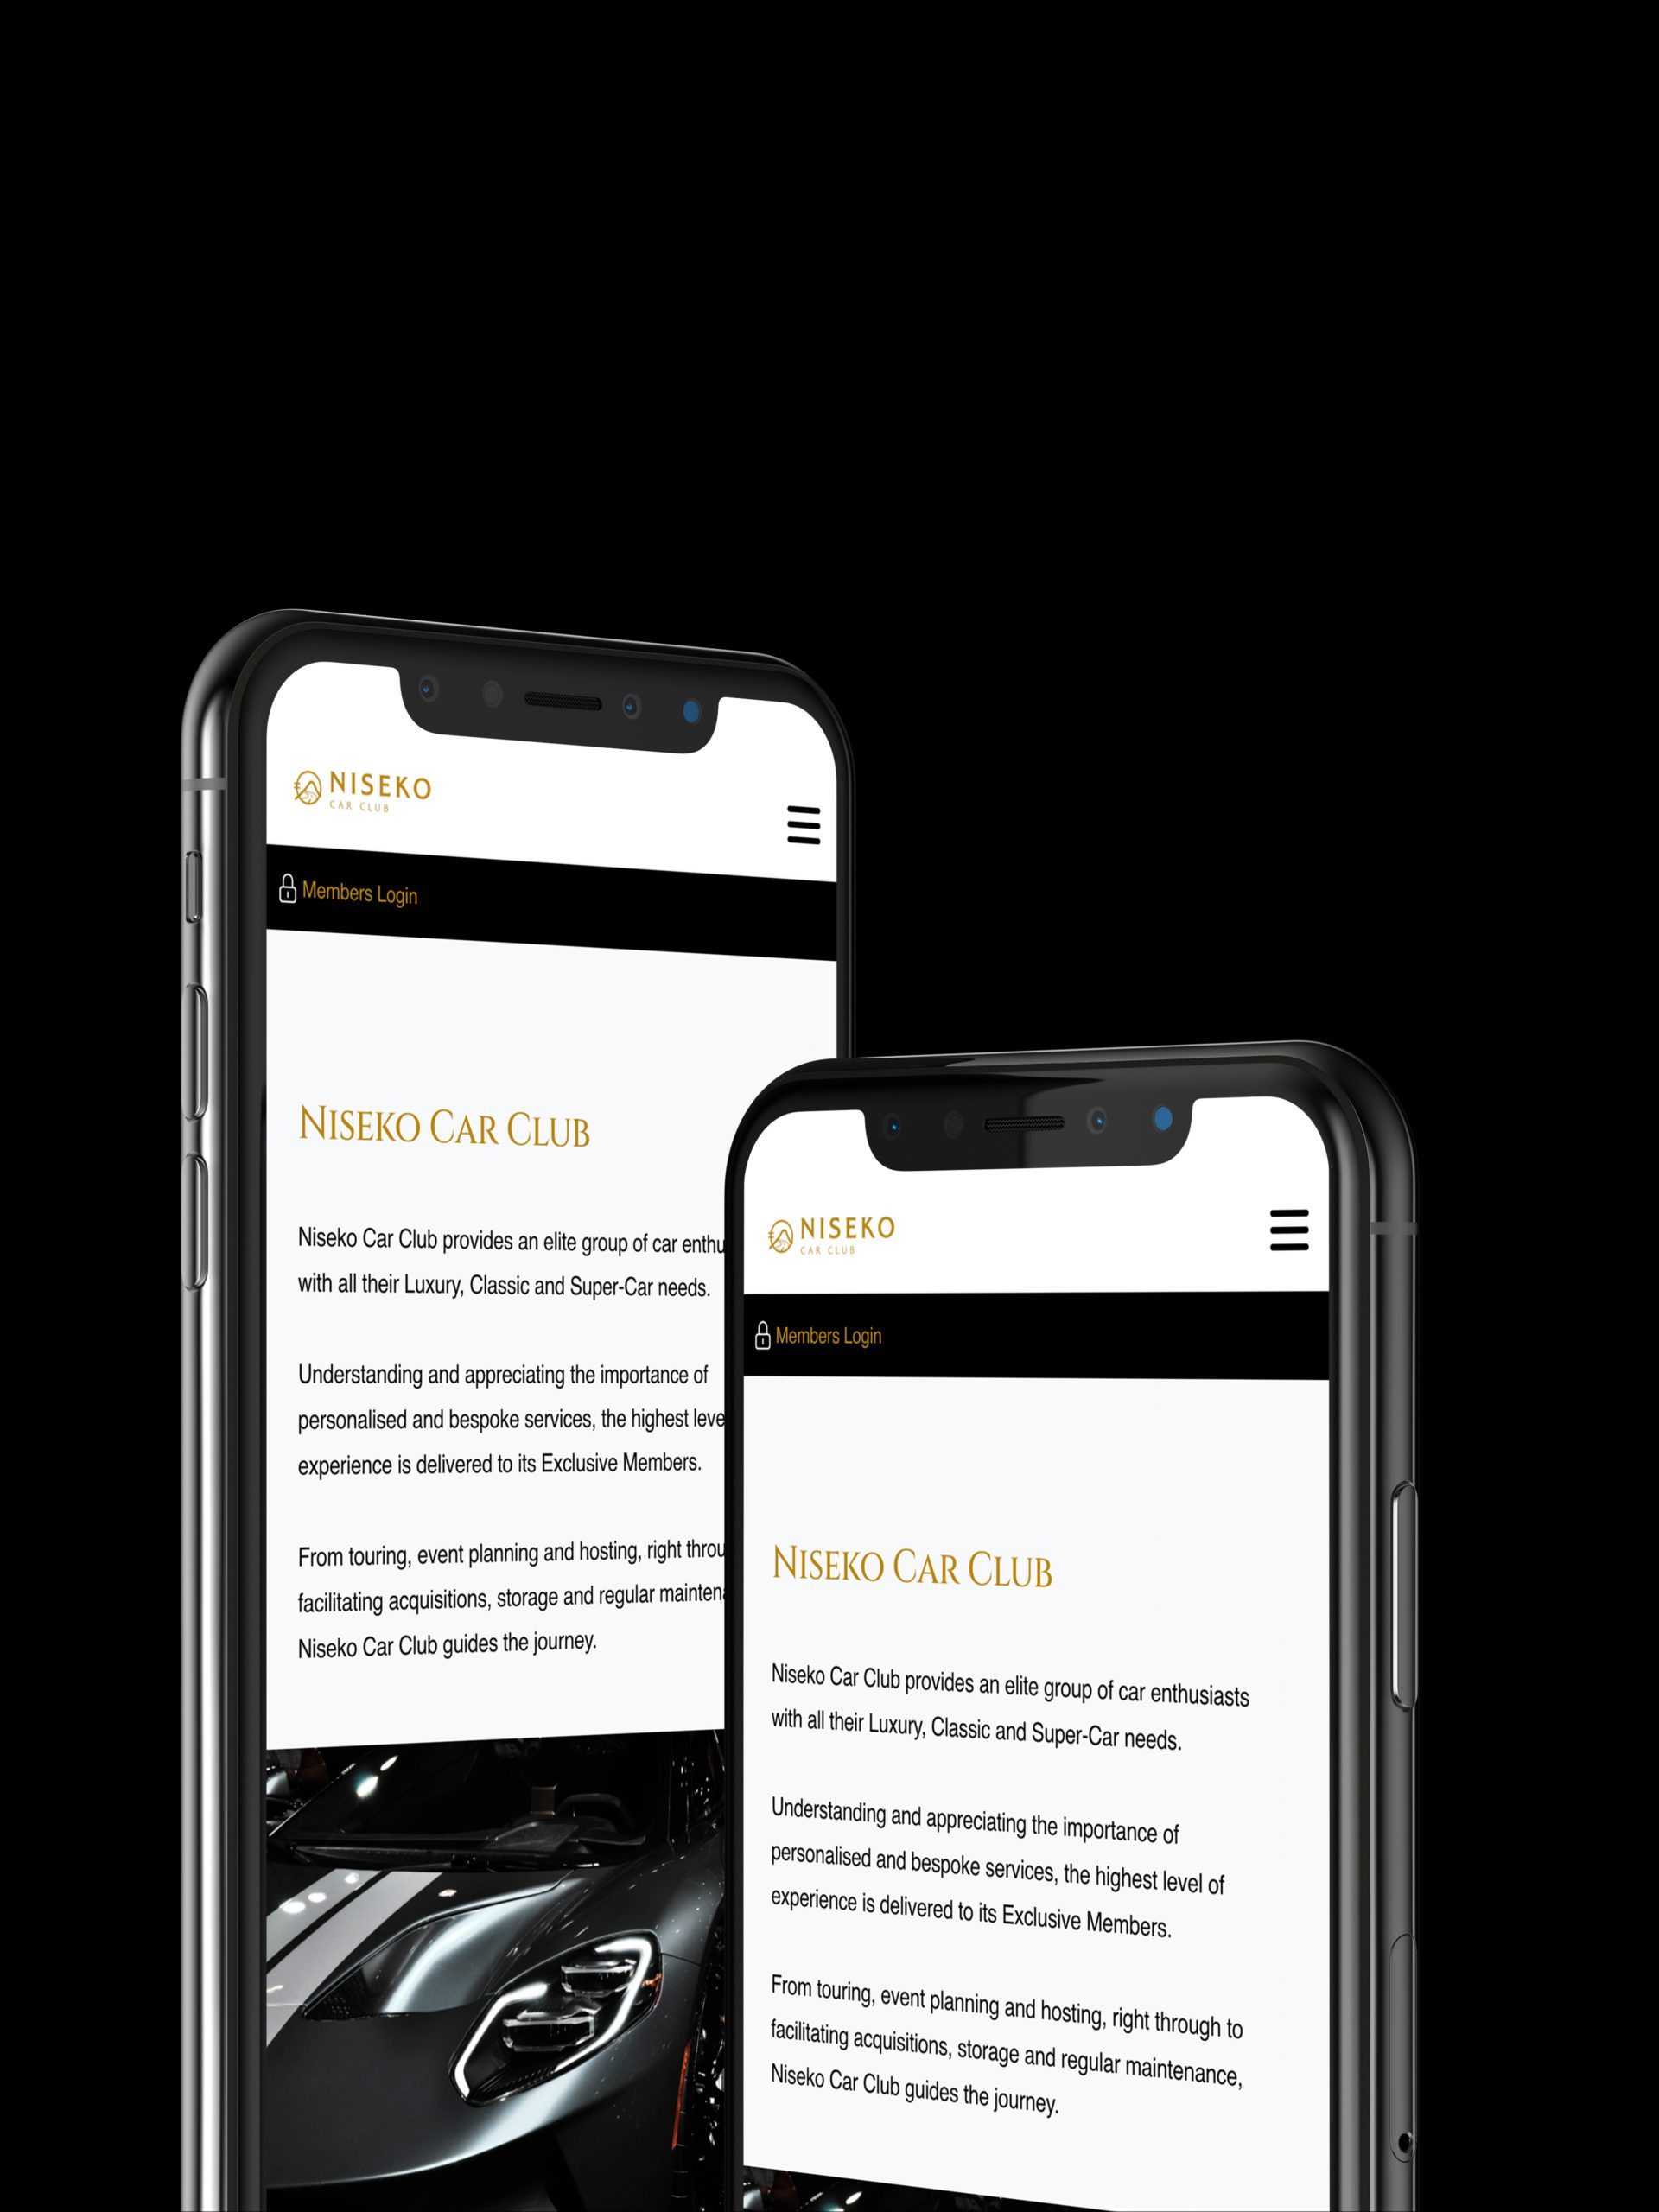 Niseko Car Club website on phone screen